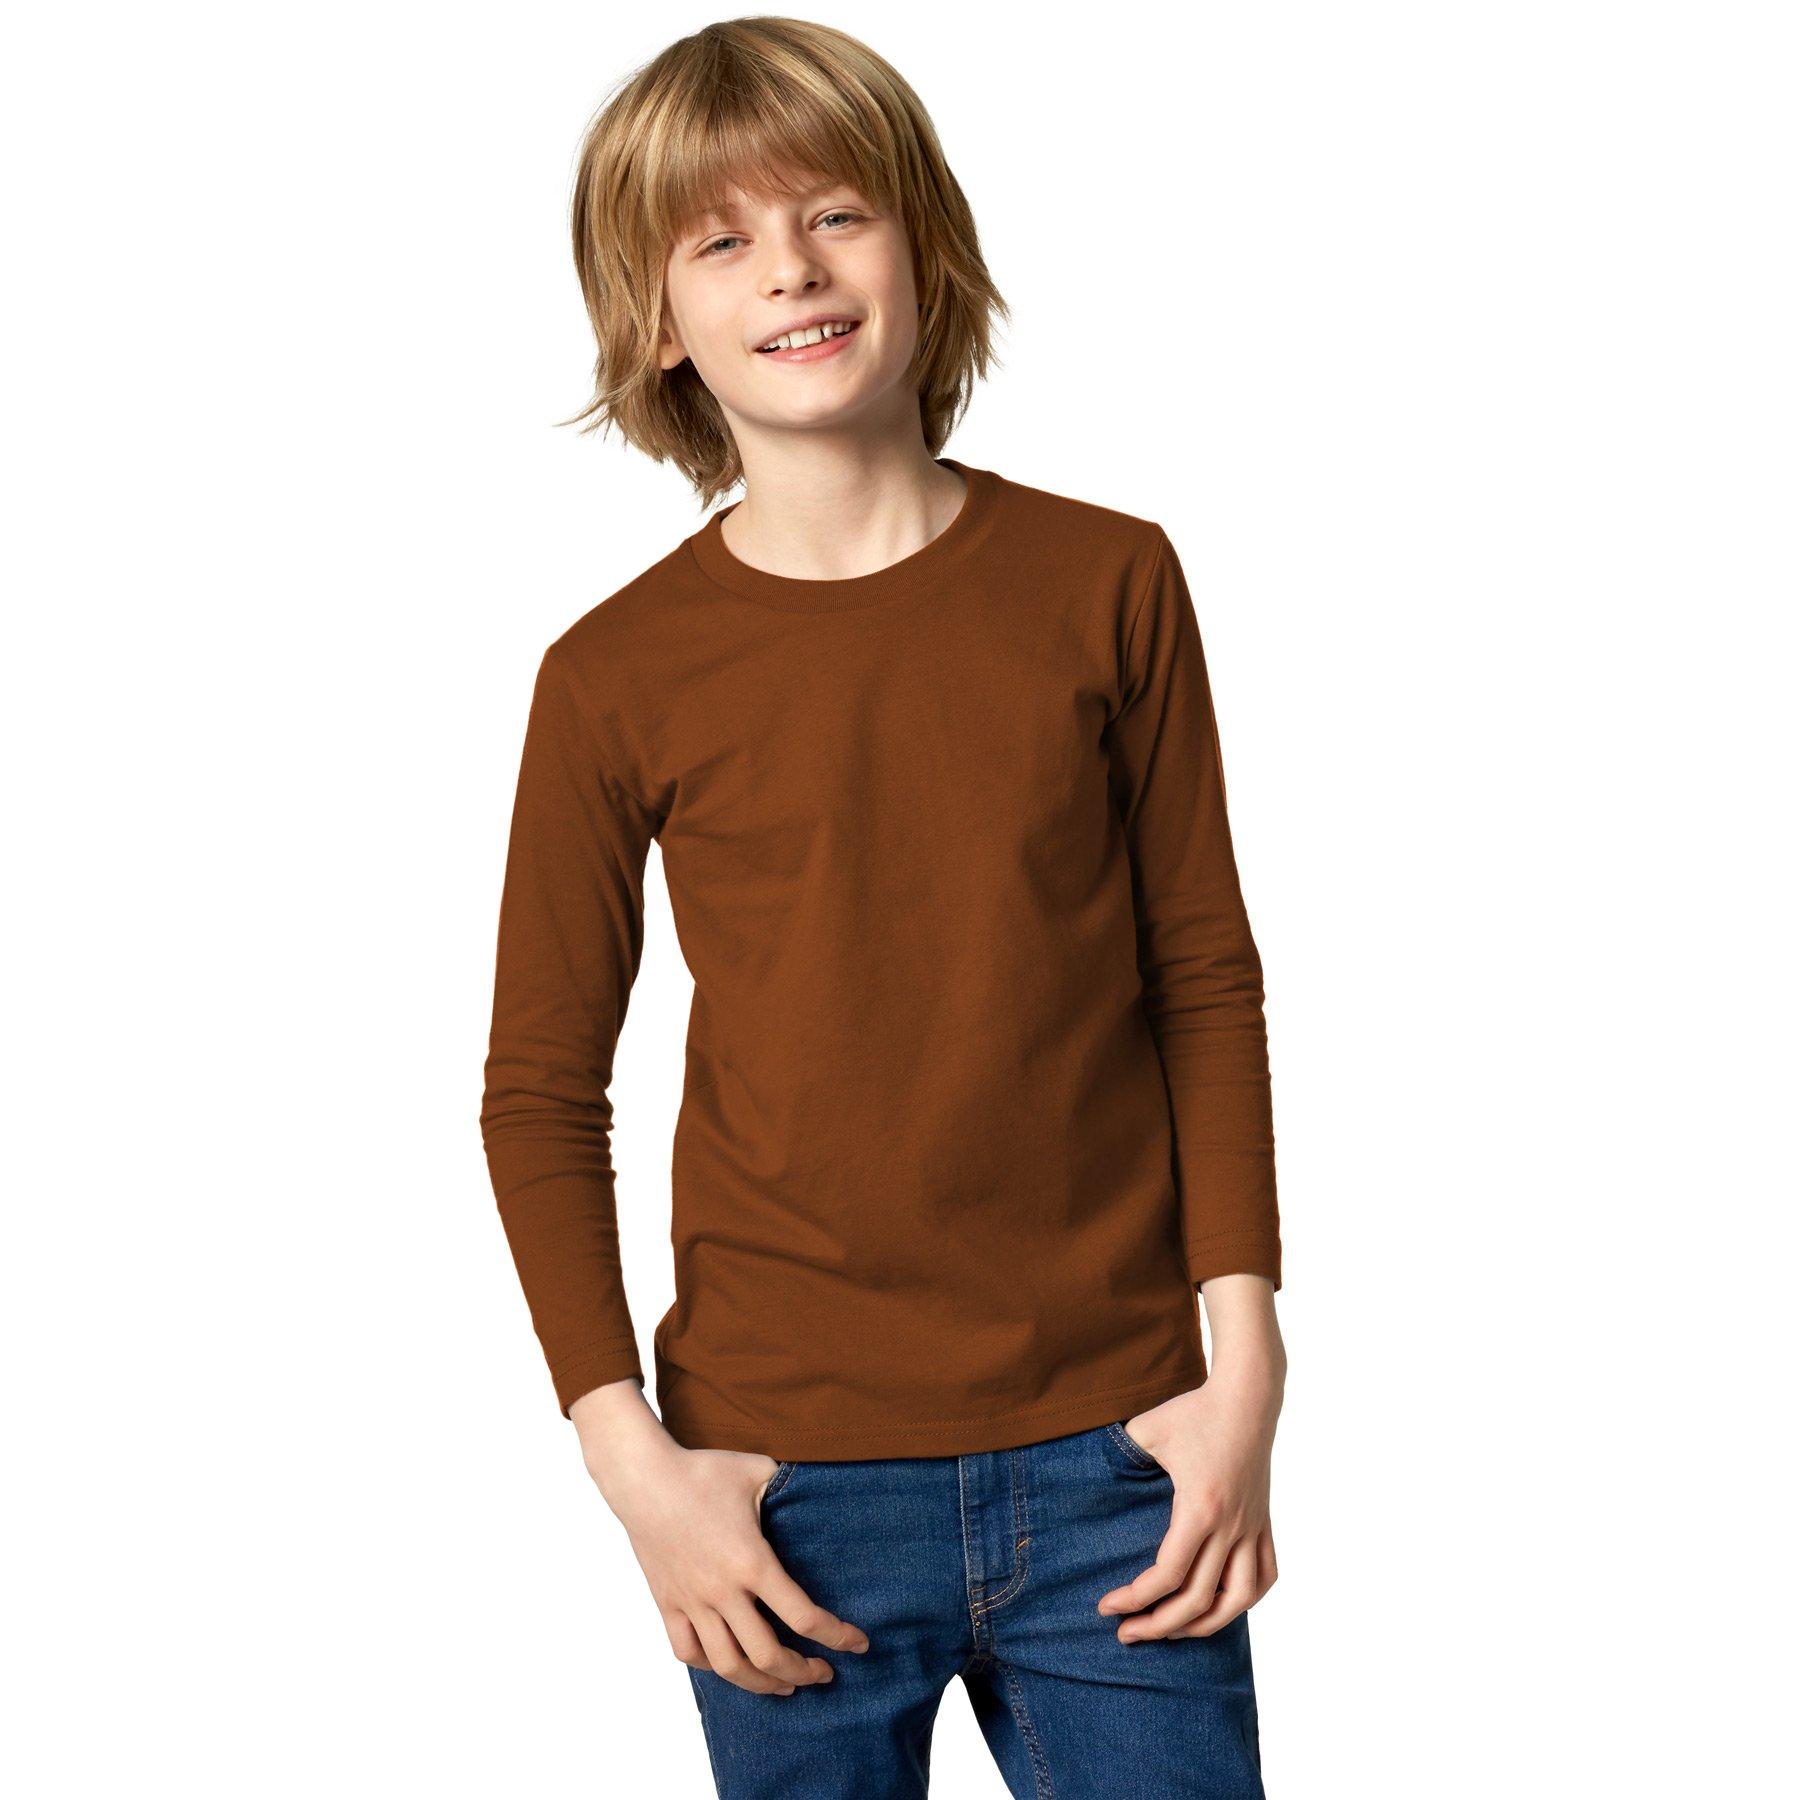 Langarm-shirt Kinder Jungen Braun 152 von Tectake